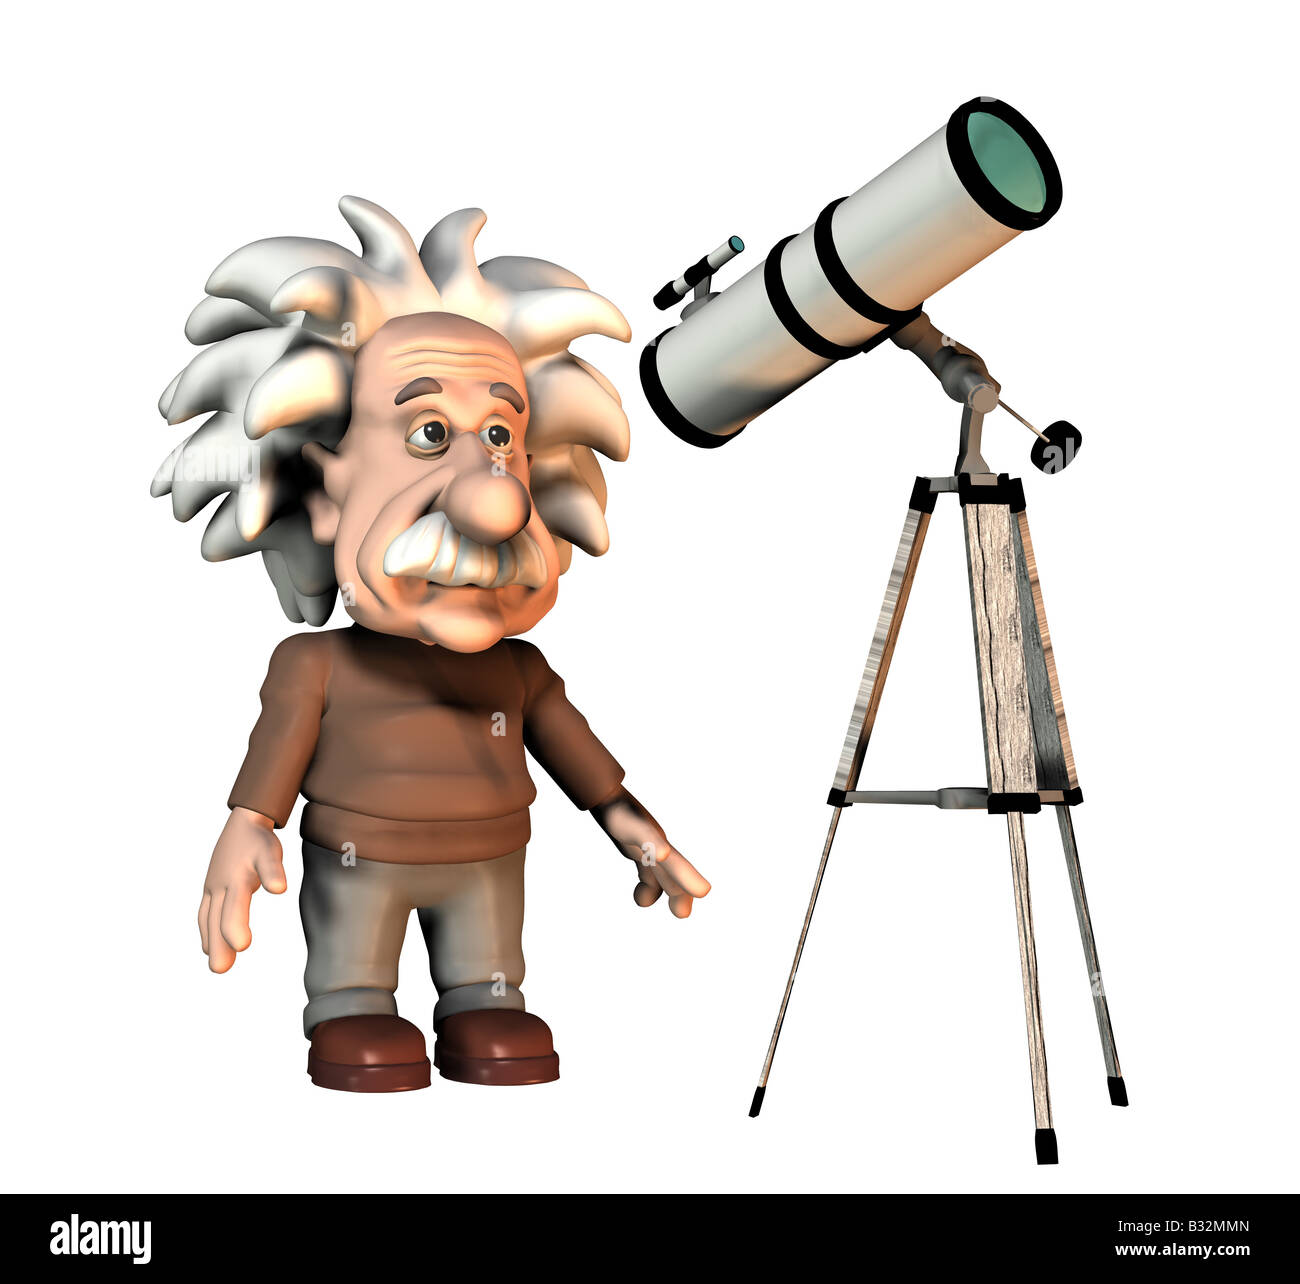 Albert Einstein with a telescope Stock Photo